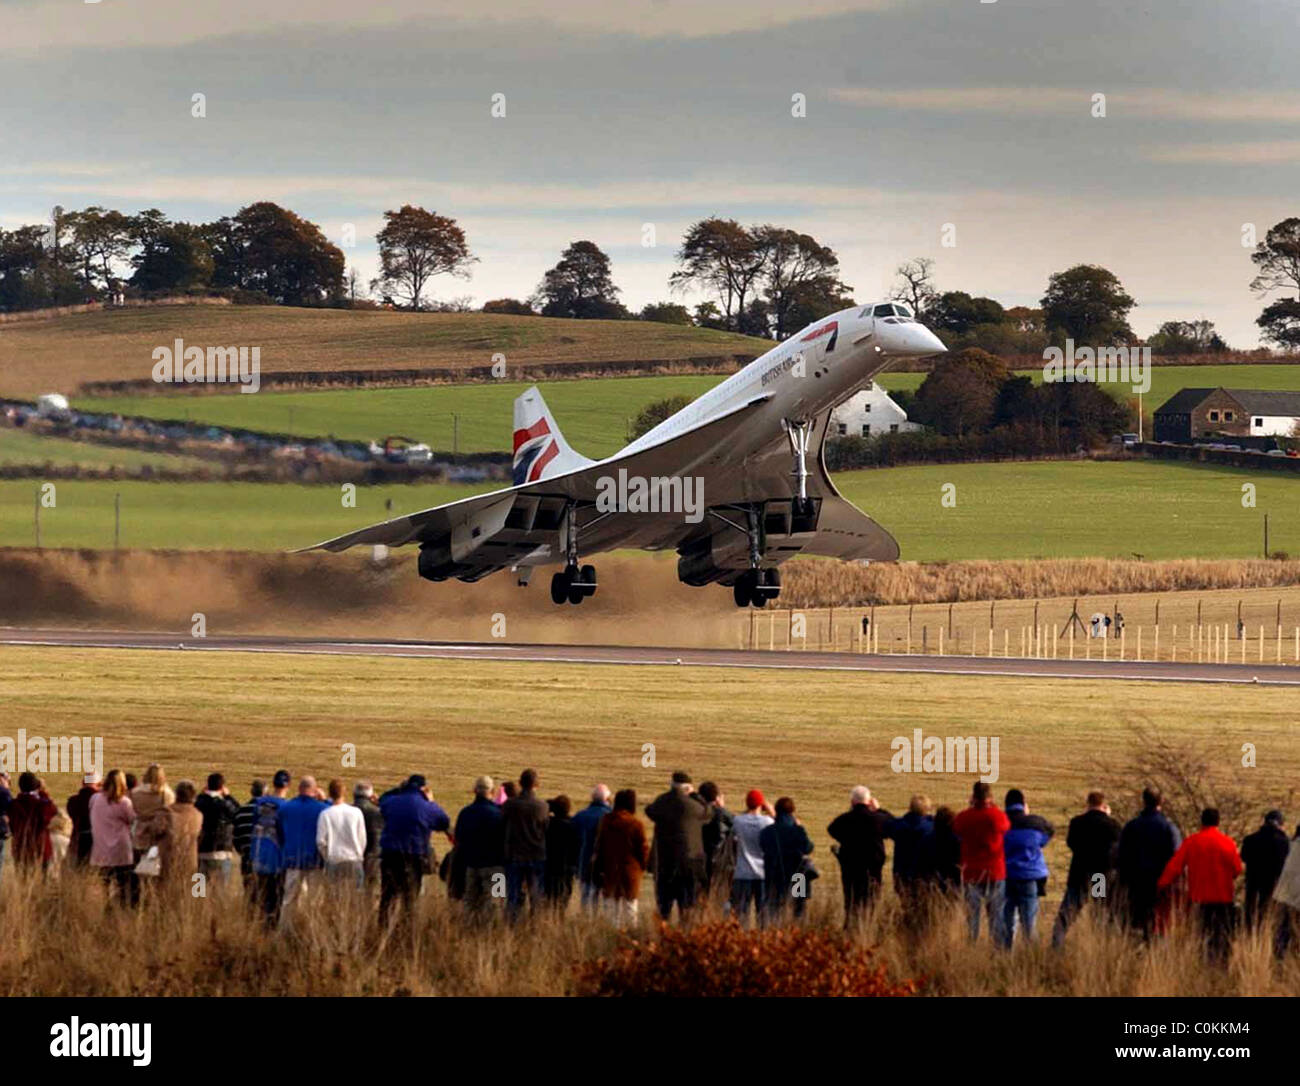 Pictured Brittish Airways Concorde arriving - taking off at Edinburgh Tournhouse Airport. Stock Photo